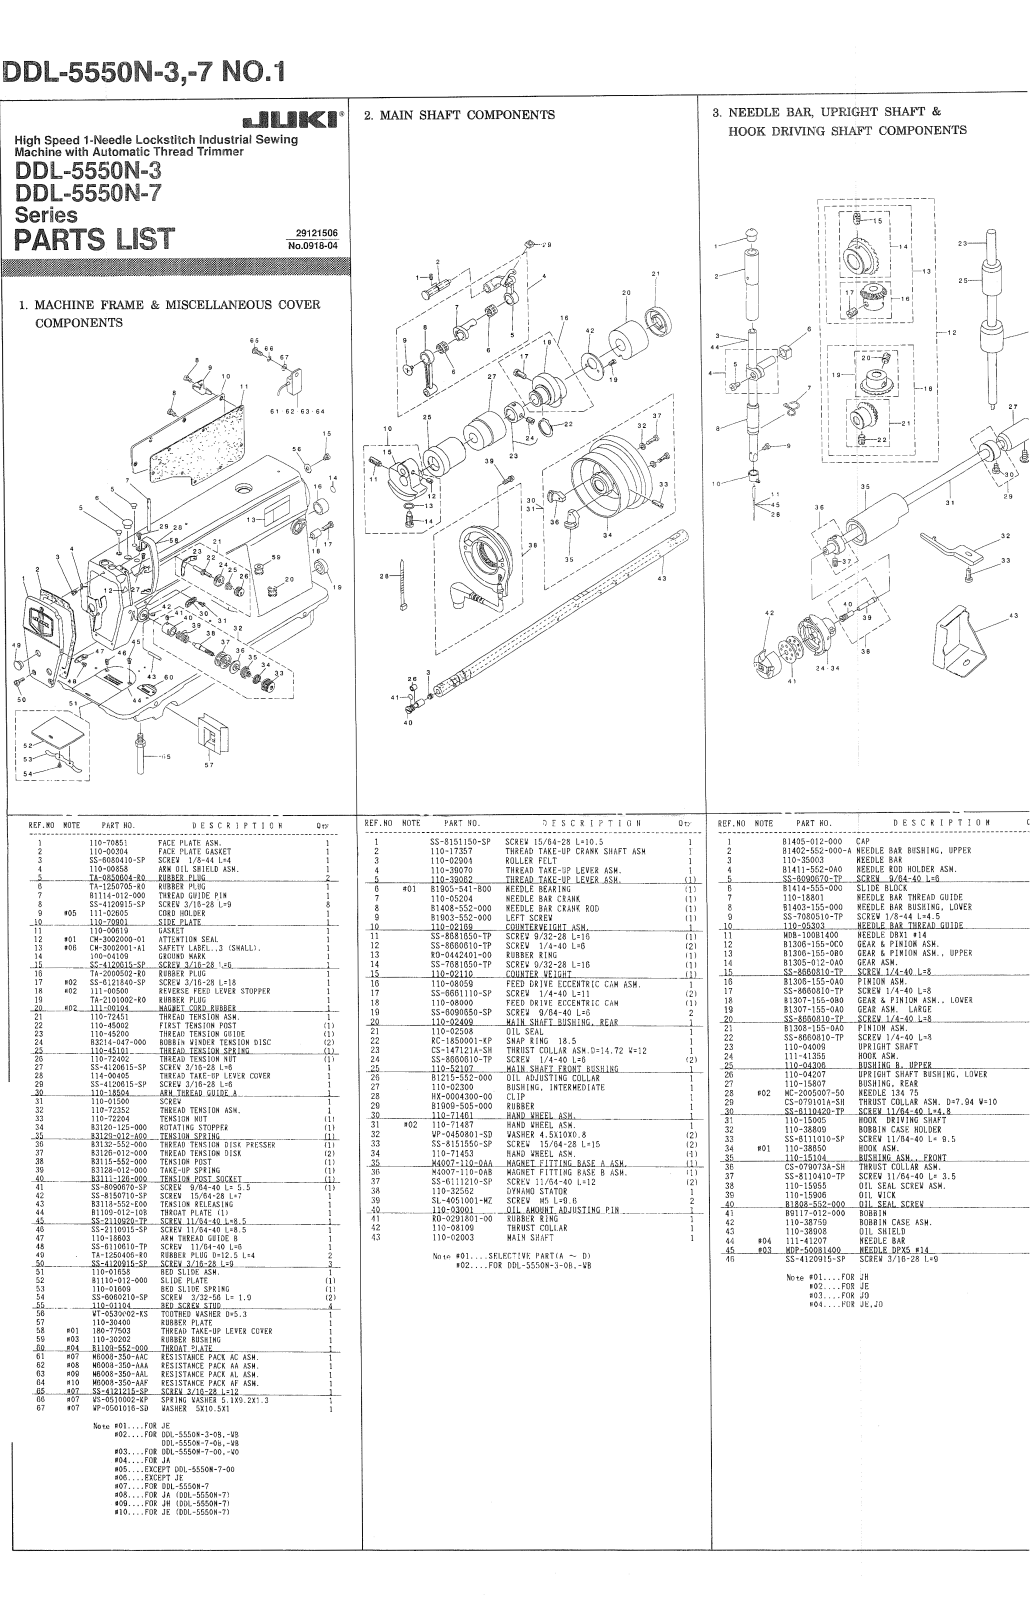 Juki DDL-5550N-3, DDL-5550N-7 Parts List